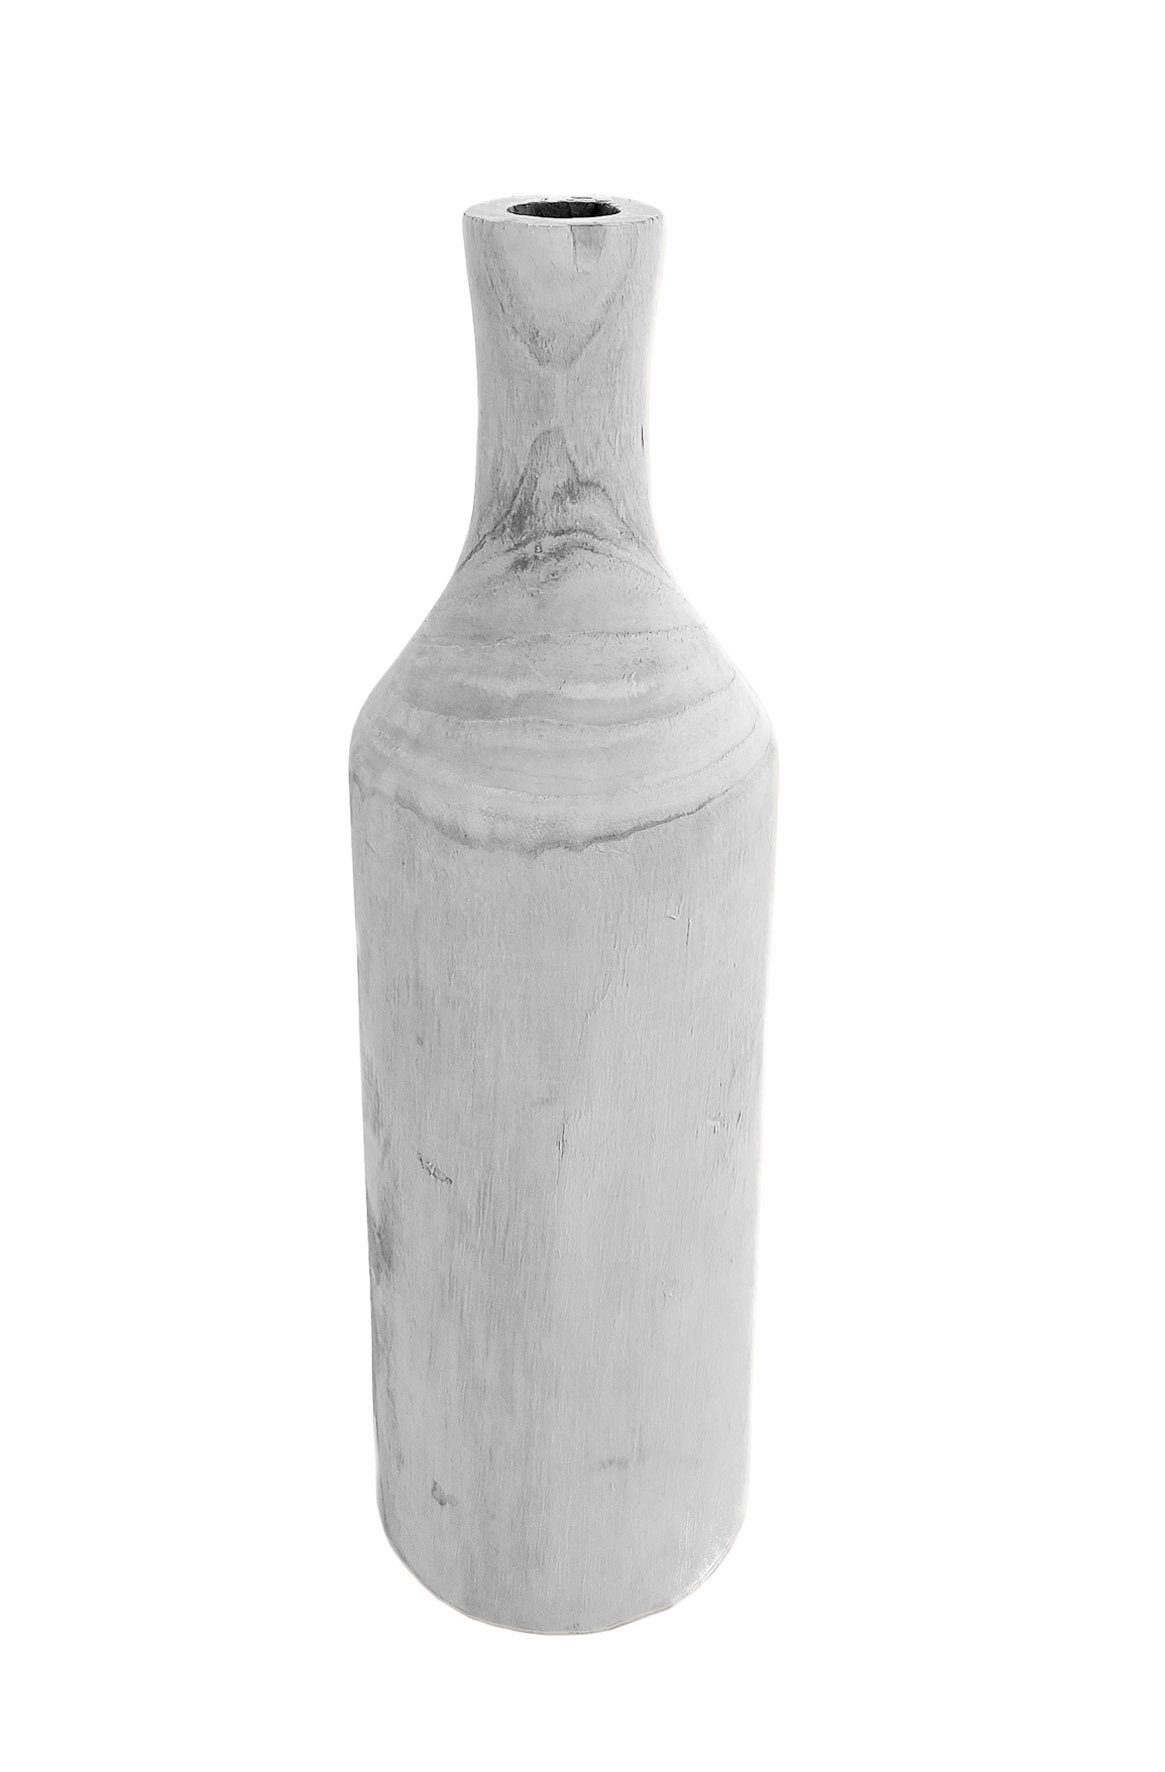 Spetebo Dekovase Design Holz Blumen Vase white washed - 46 cm (Packung, 1 St., 1 Vase), Deko Holzvase Flasche naturbelassen